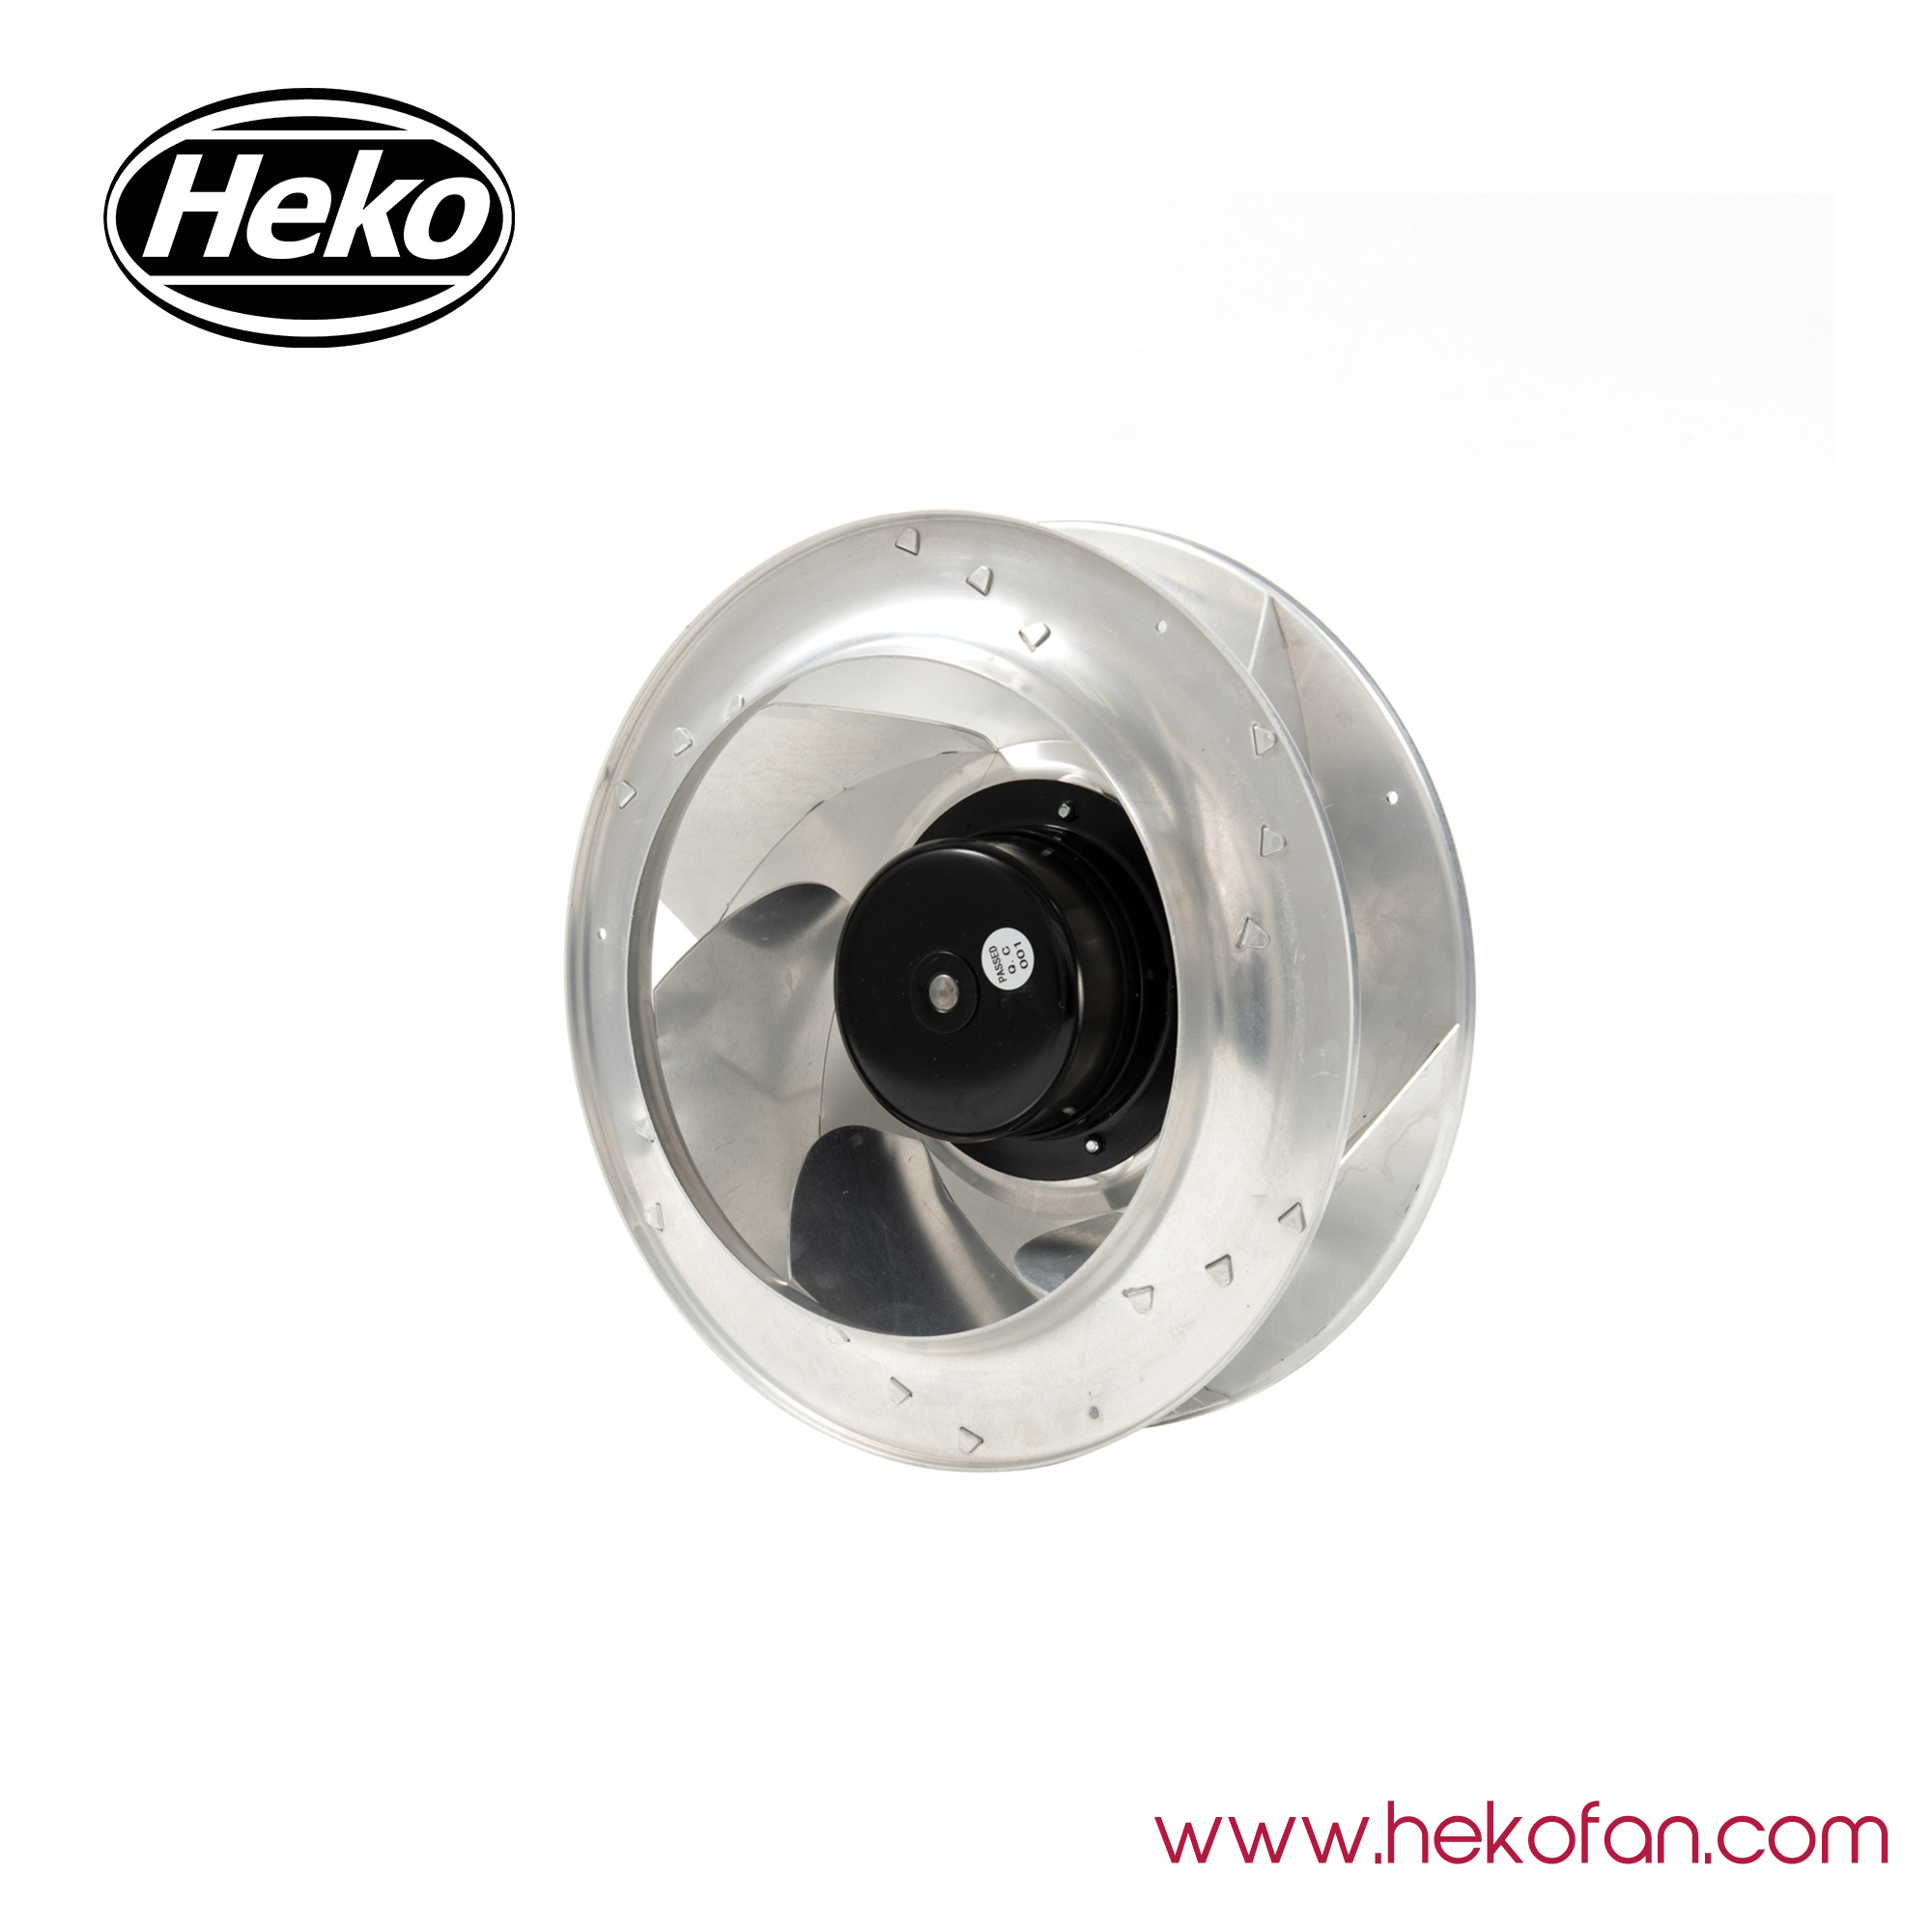 HEKO DC102mm Centrifugal Motor Fan For Air Purifier